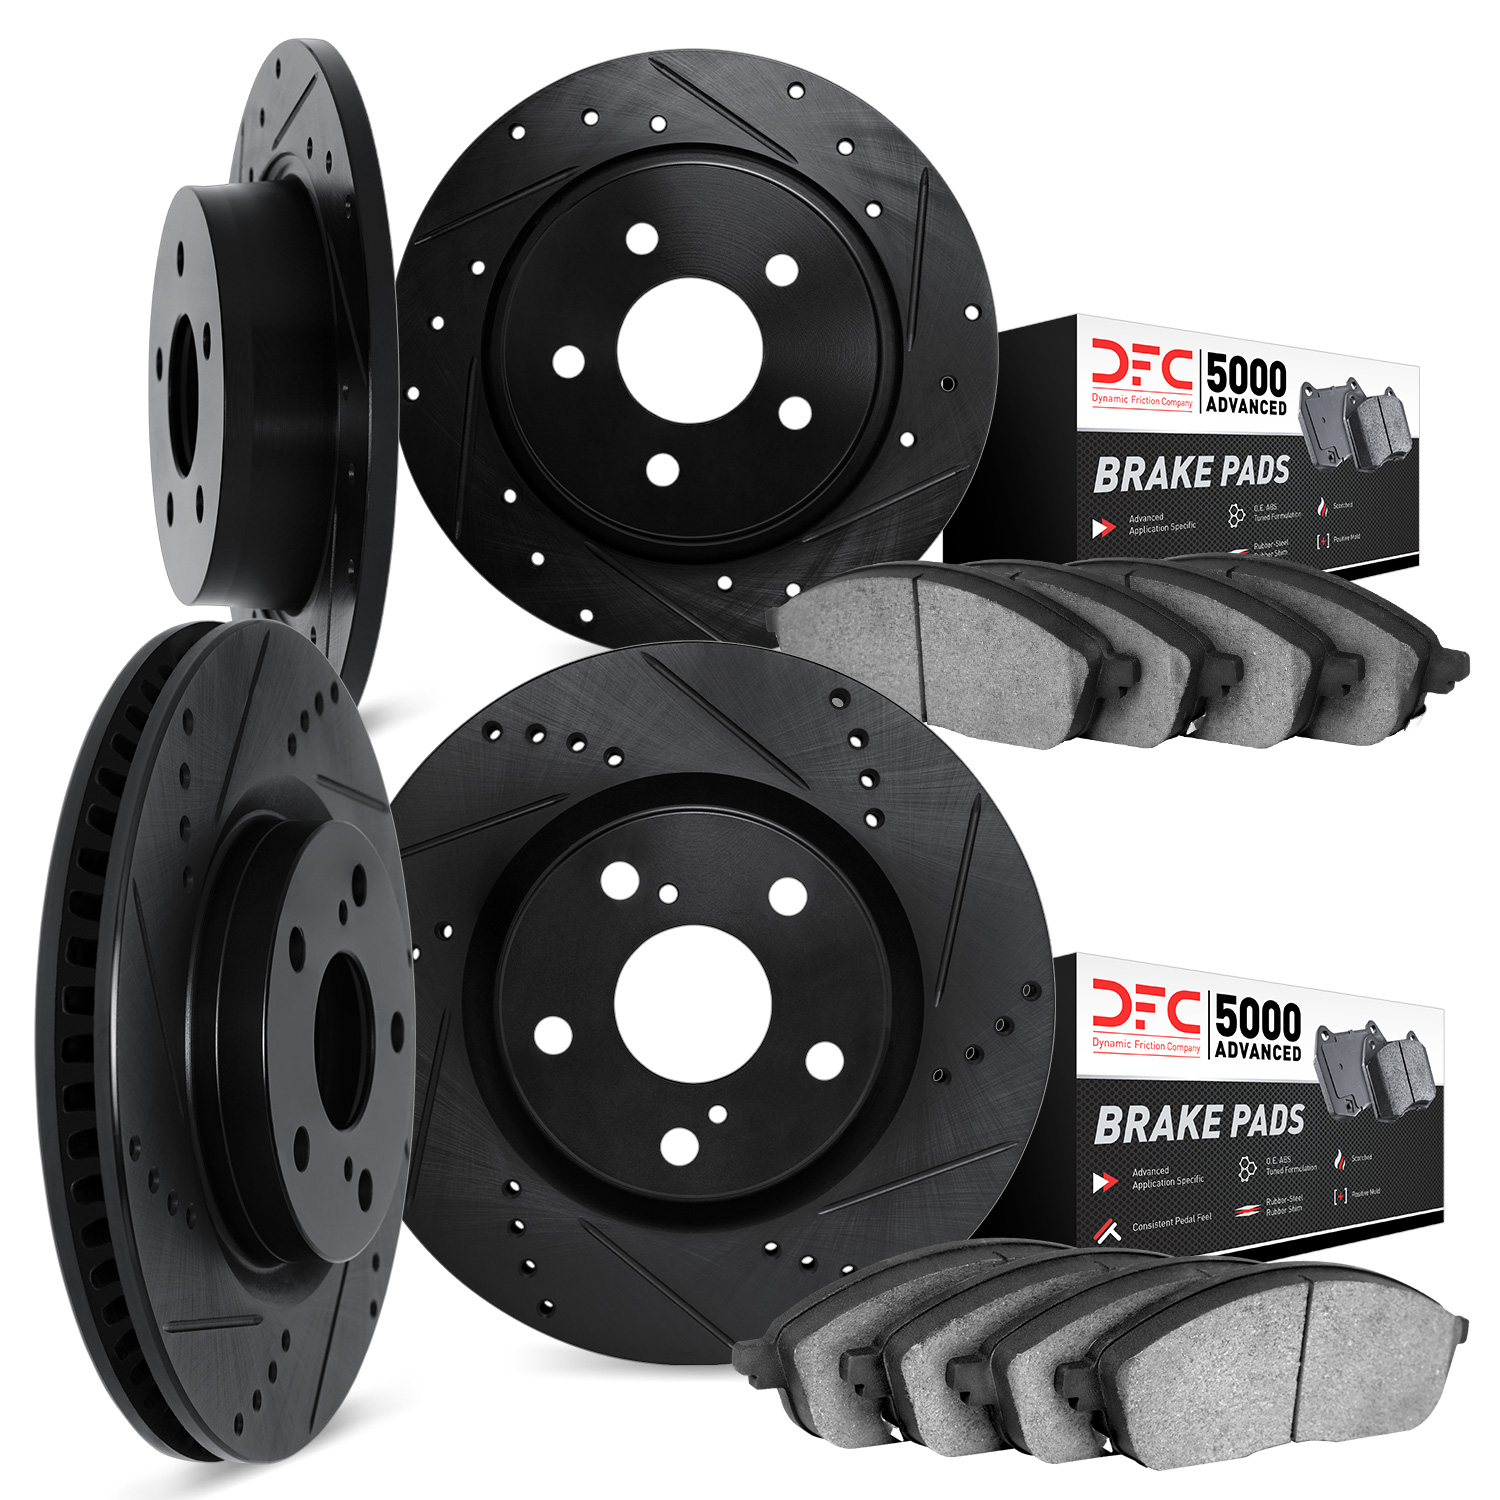 8504-54389 Drilled/Slotted Brake Rotors w/5000 Advanced Brake Pads Kit [Black], 2020-2020 Ford/Lincoln/Mercury/Mazda, Position: